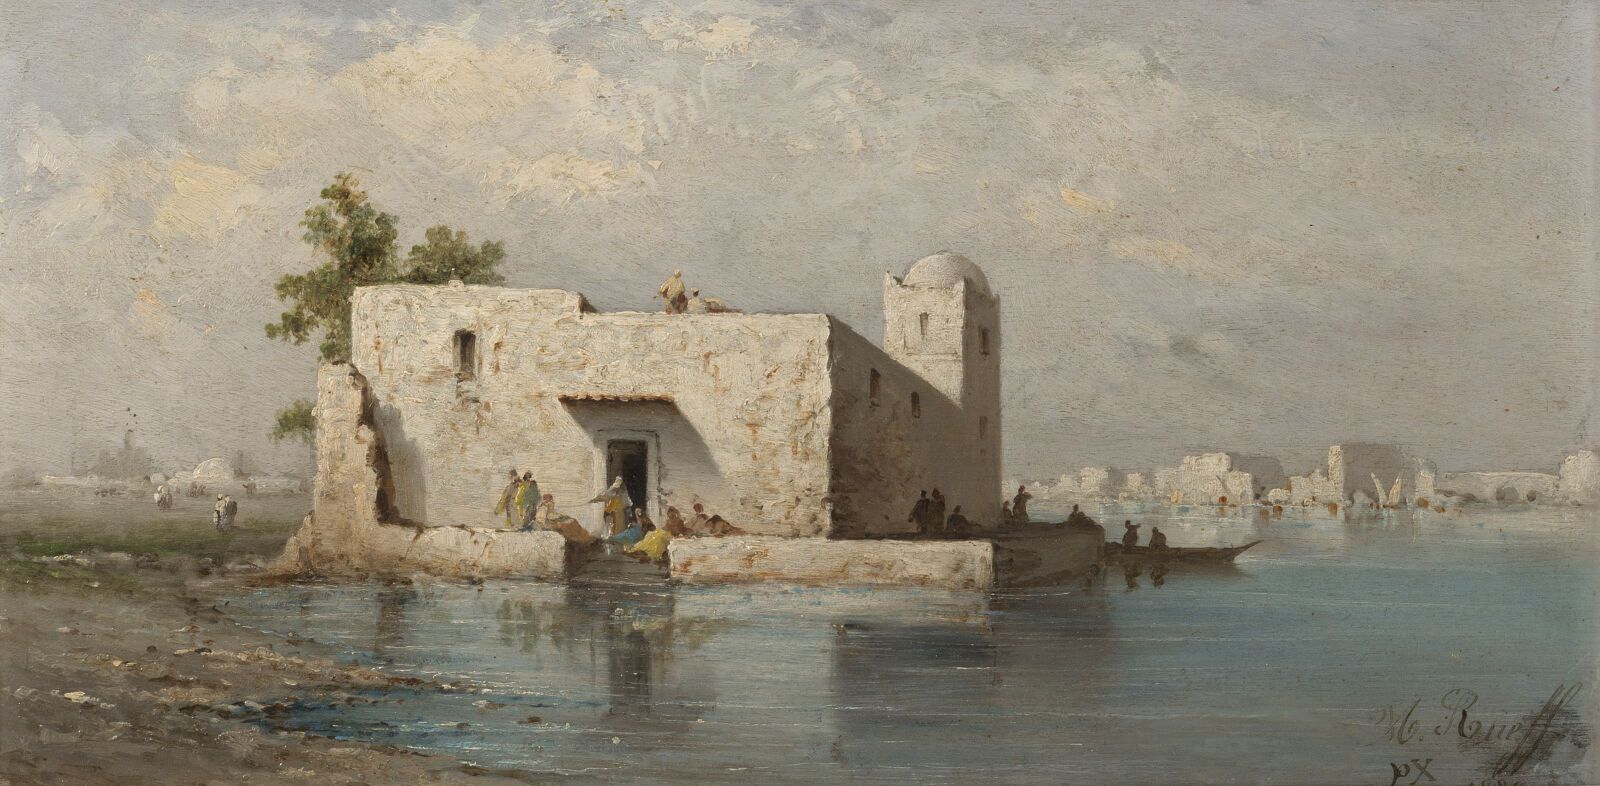 Null A.RUEFF

突尼斯的淡水湖，1889年

面板油画，右下角有签名，日期为1889年。

21.5 x 41 厘米。